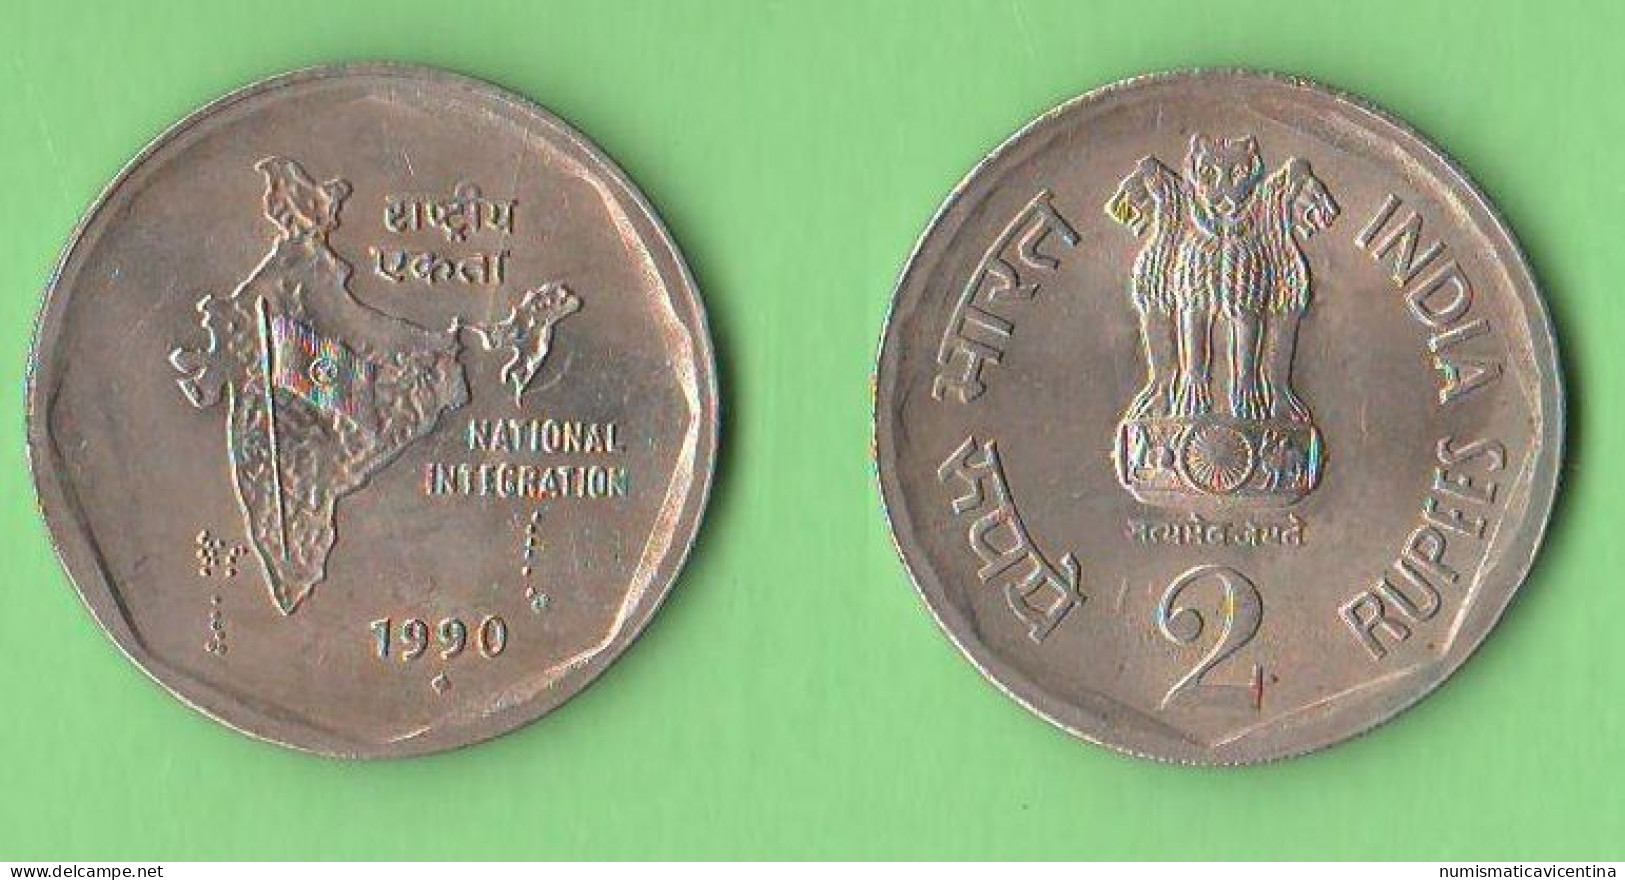 India 2 Rupees 1990 Inde National Integration Bombay Mint Nickel Coin - Inde